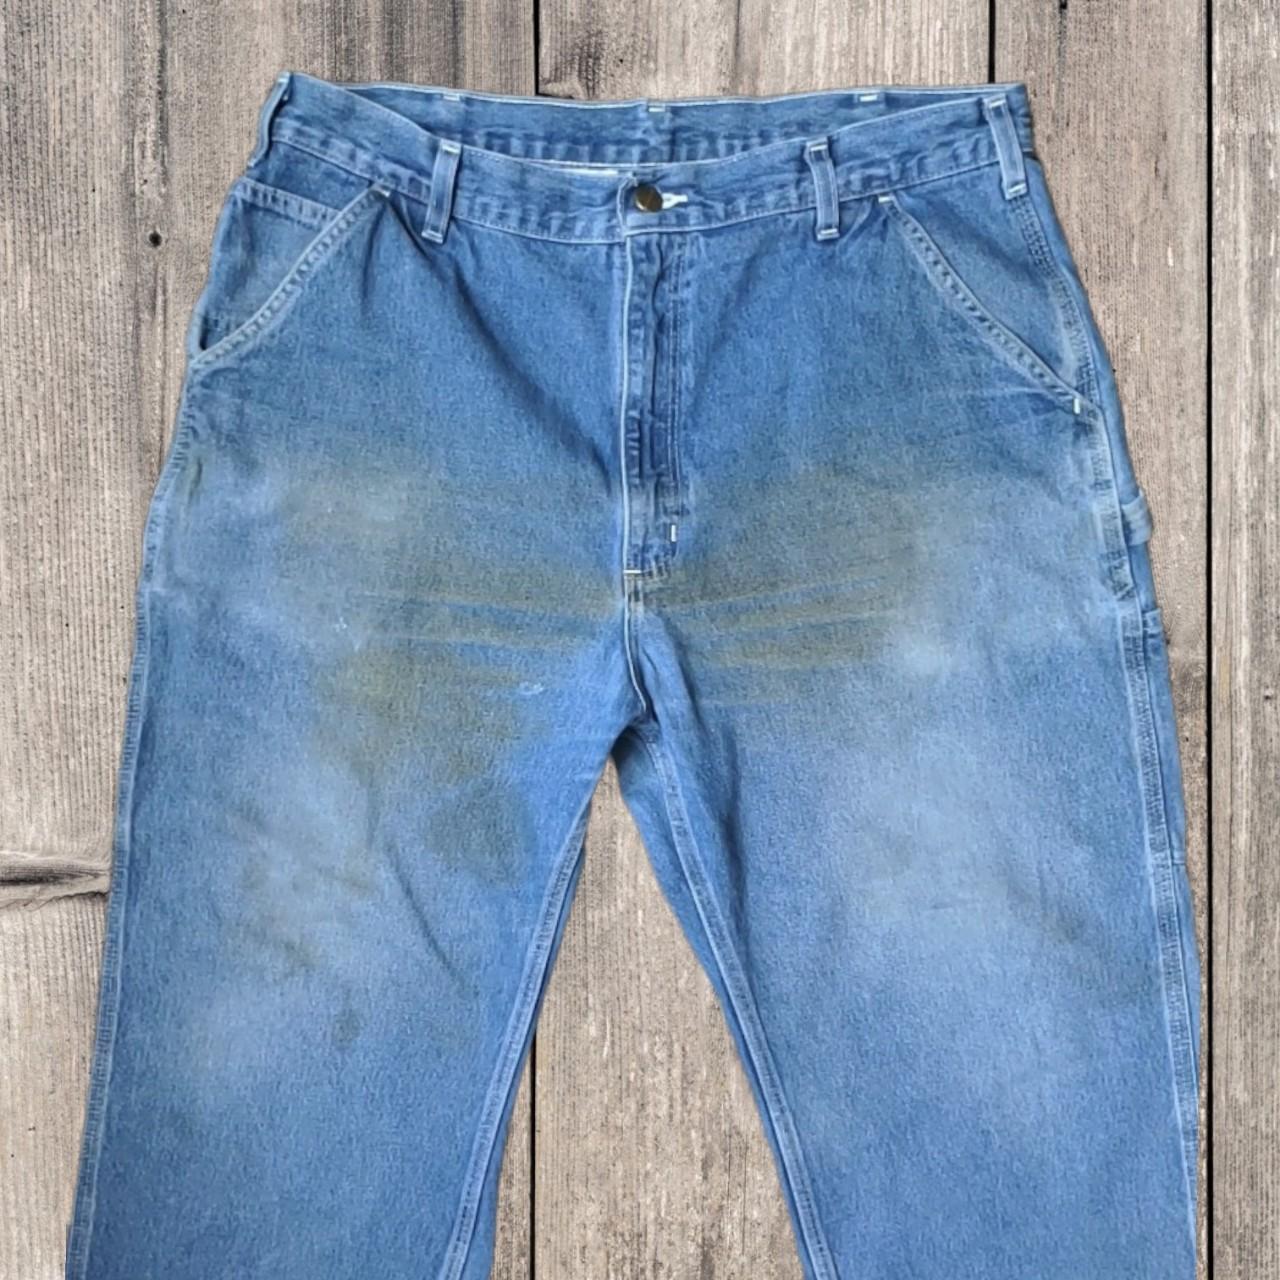 Vintage Carhartt carpenter style jeans in blue... - Depop